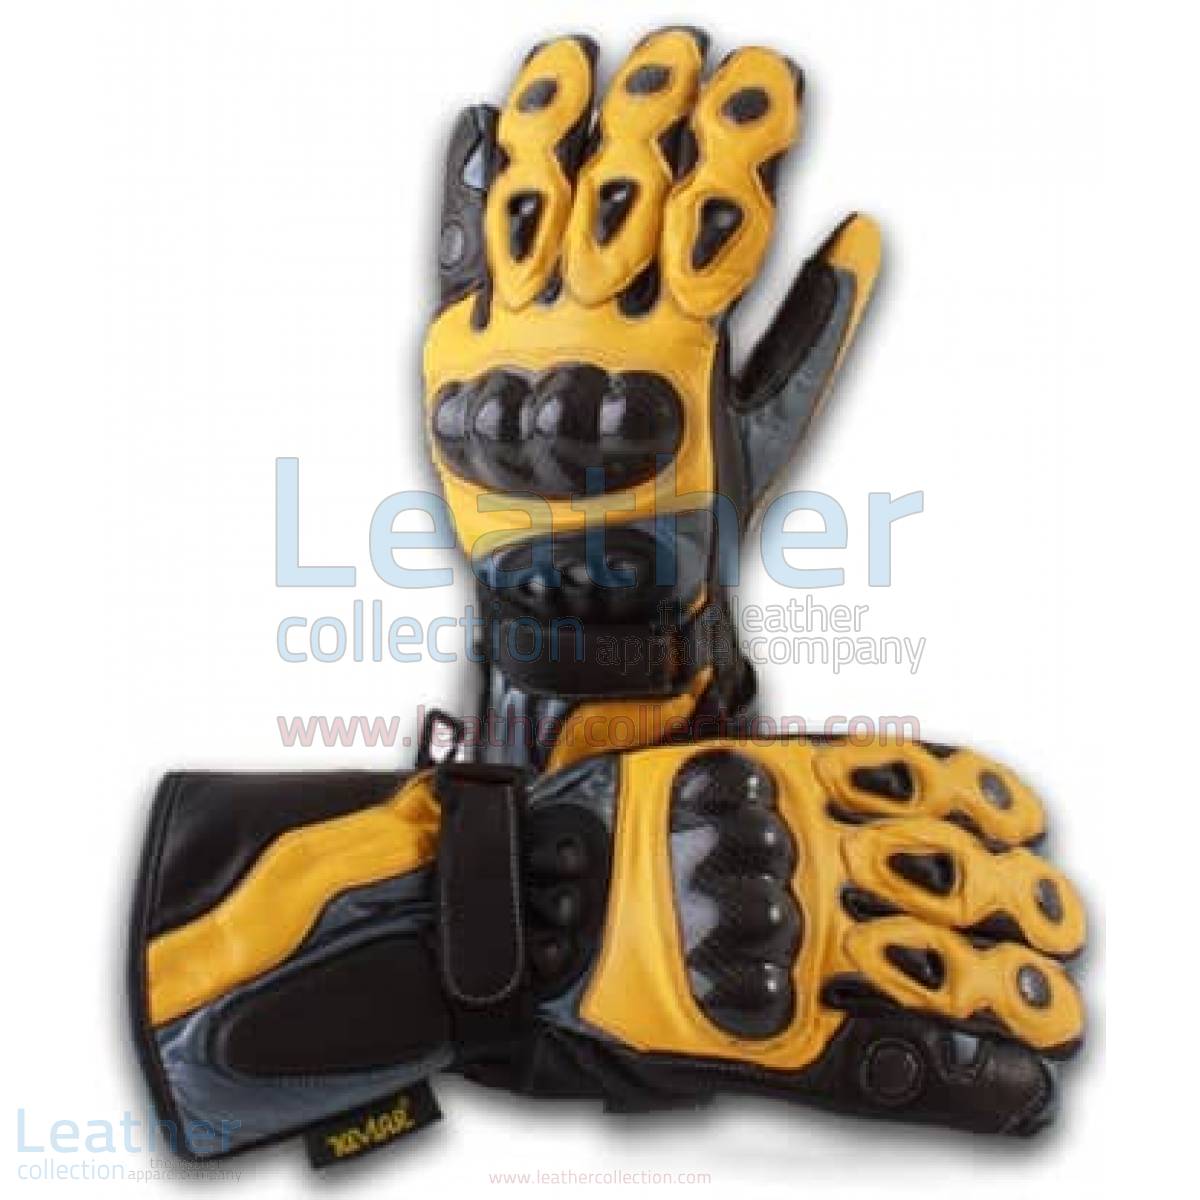 Scorpio Racer Gloves